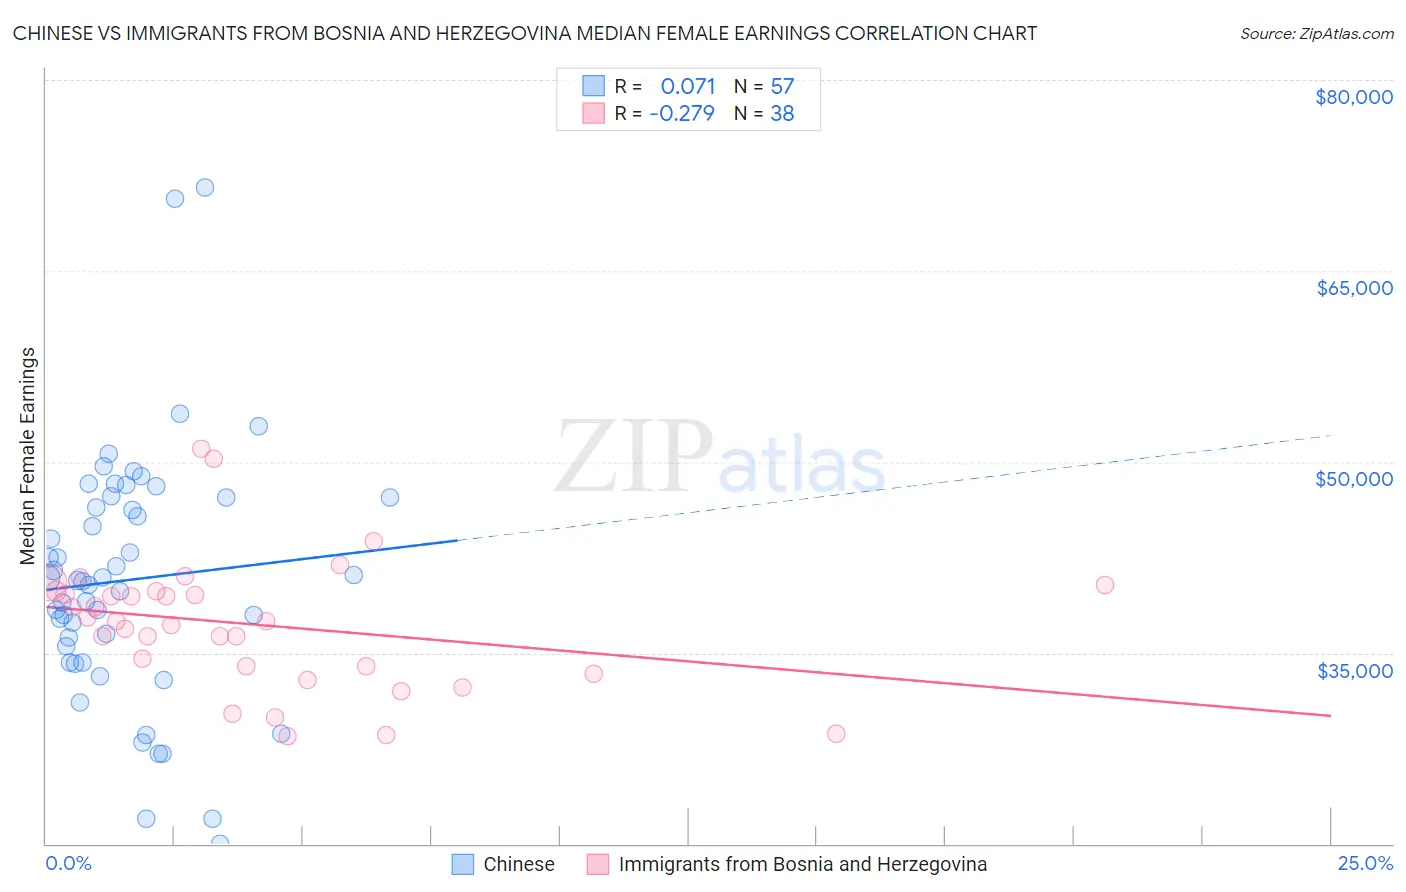 Chinese vs Immigrants from Bosnia and Herzegovina Median Female Earnings